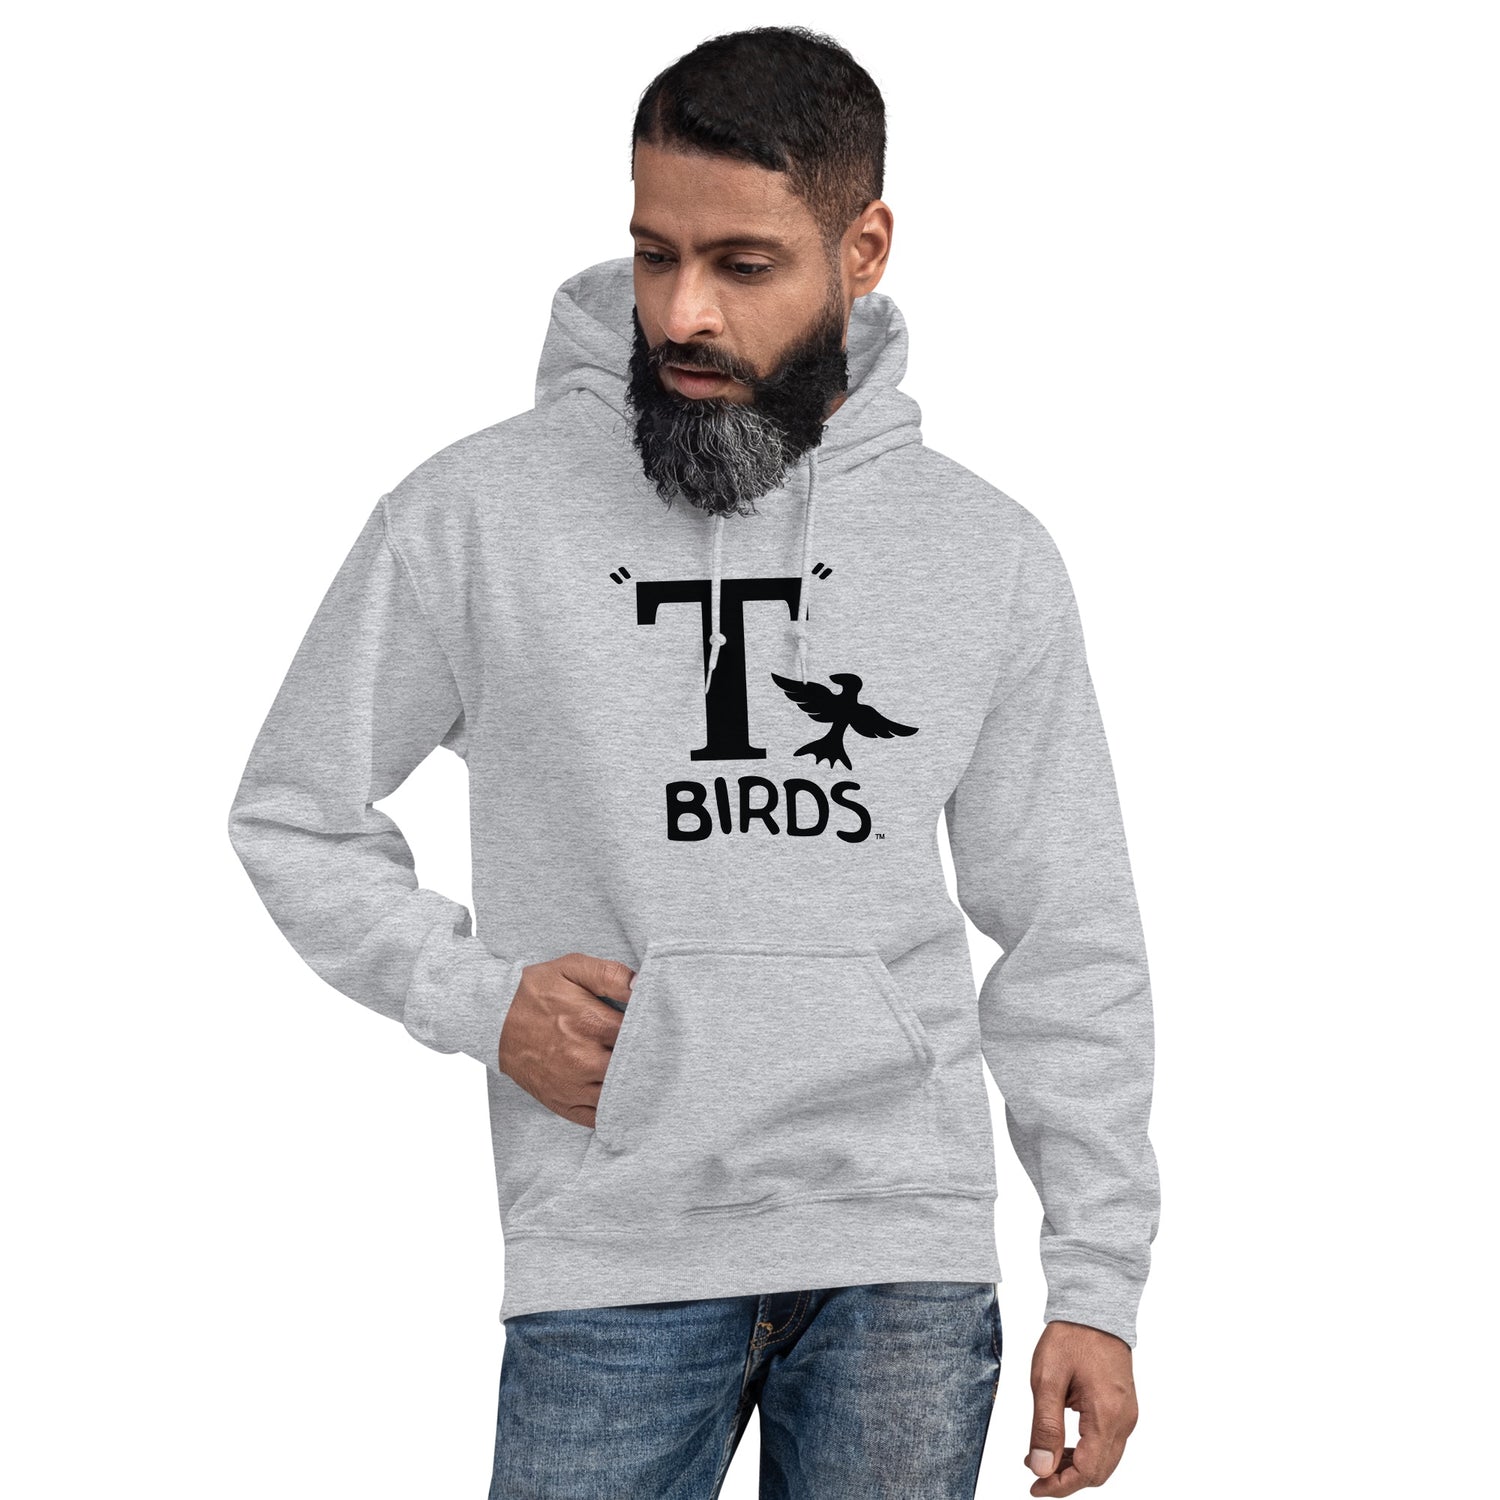 T-Birds Grease Shirt